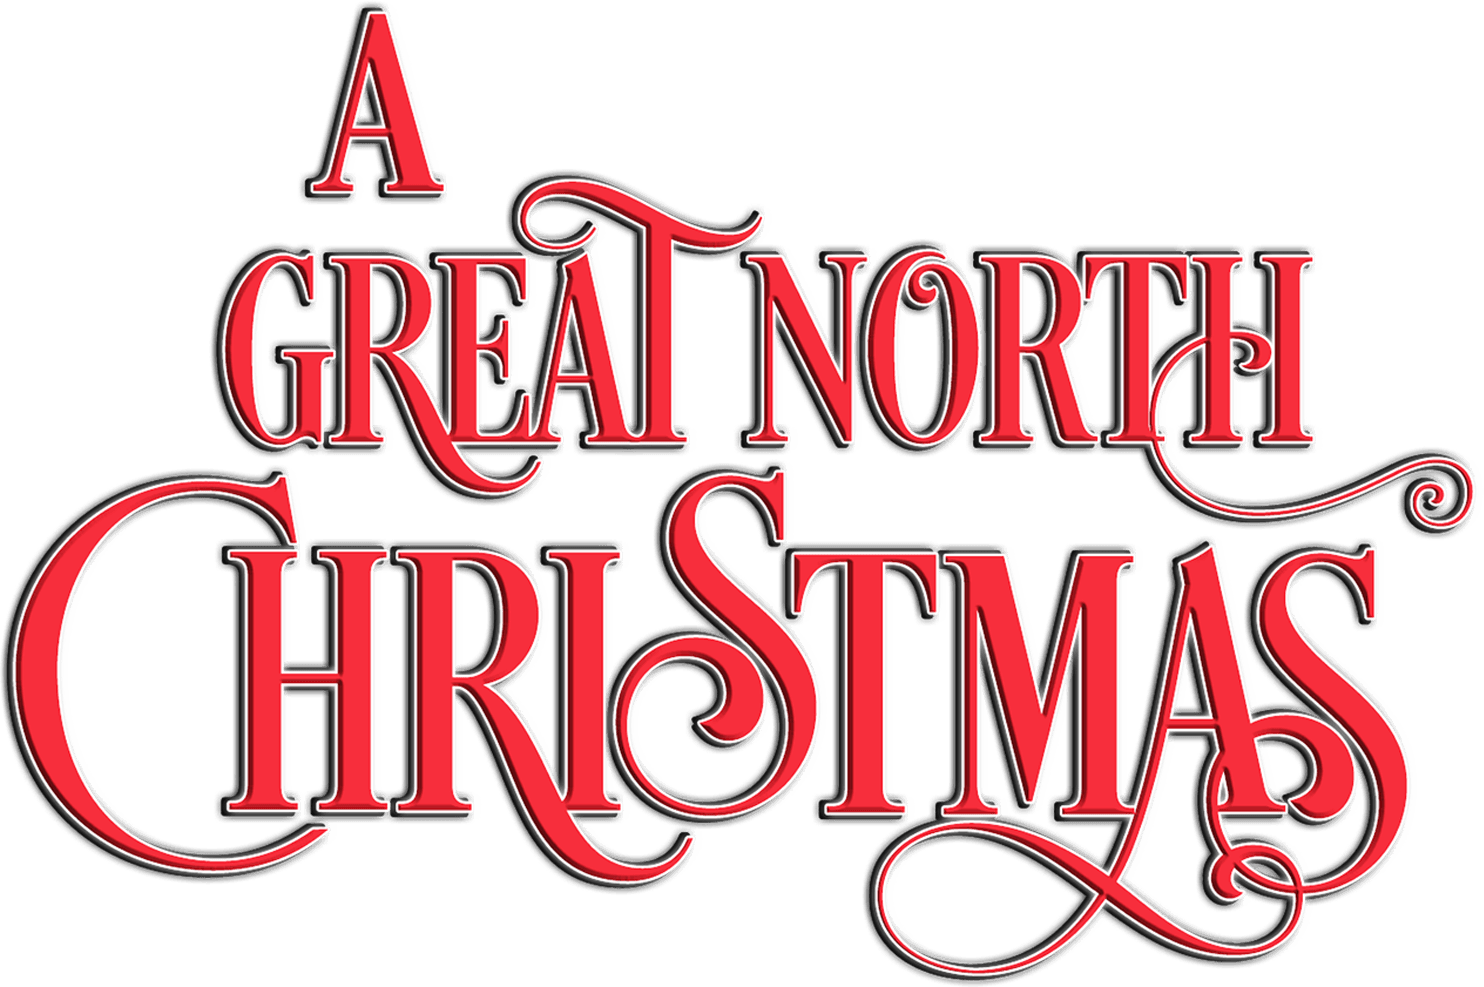 A Great North Christmas logo